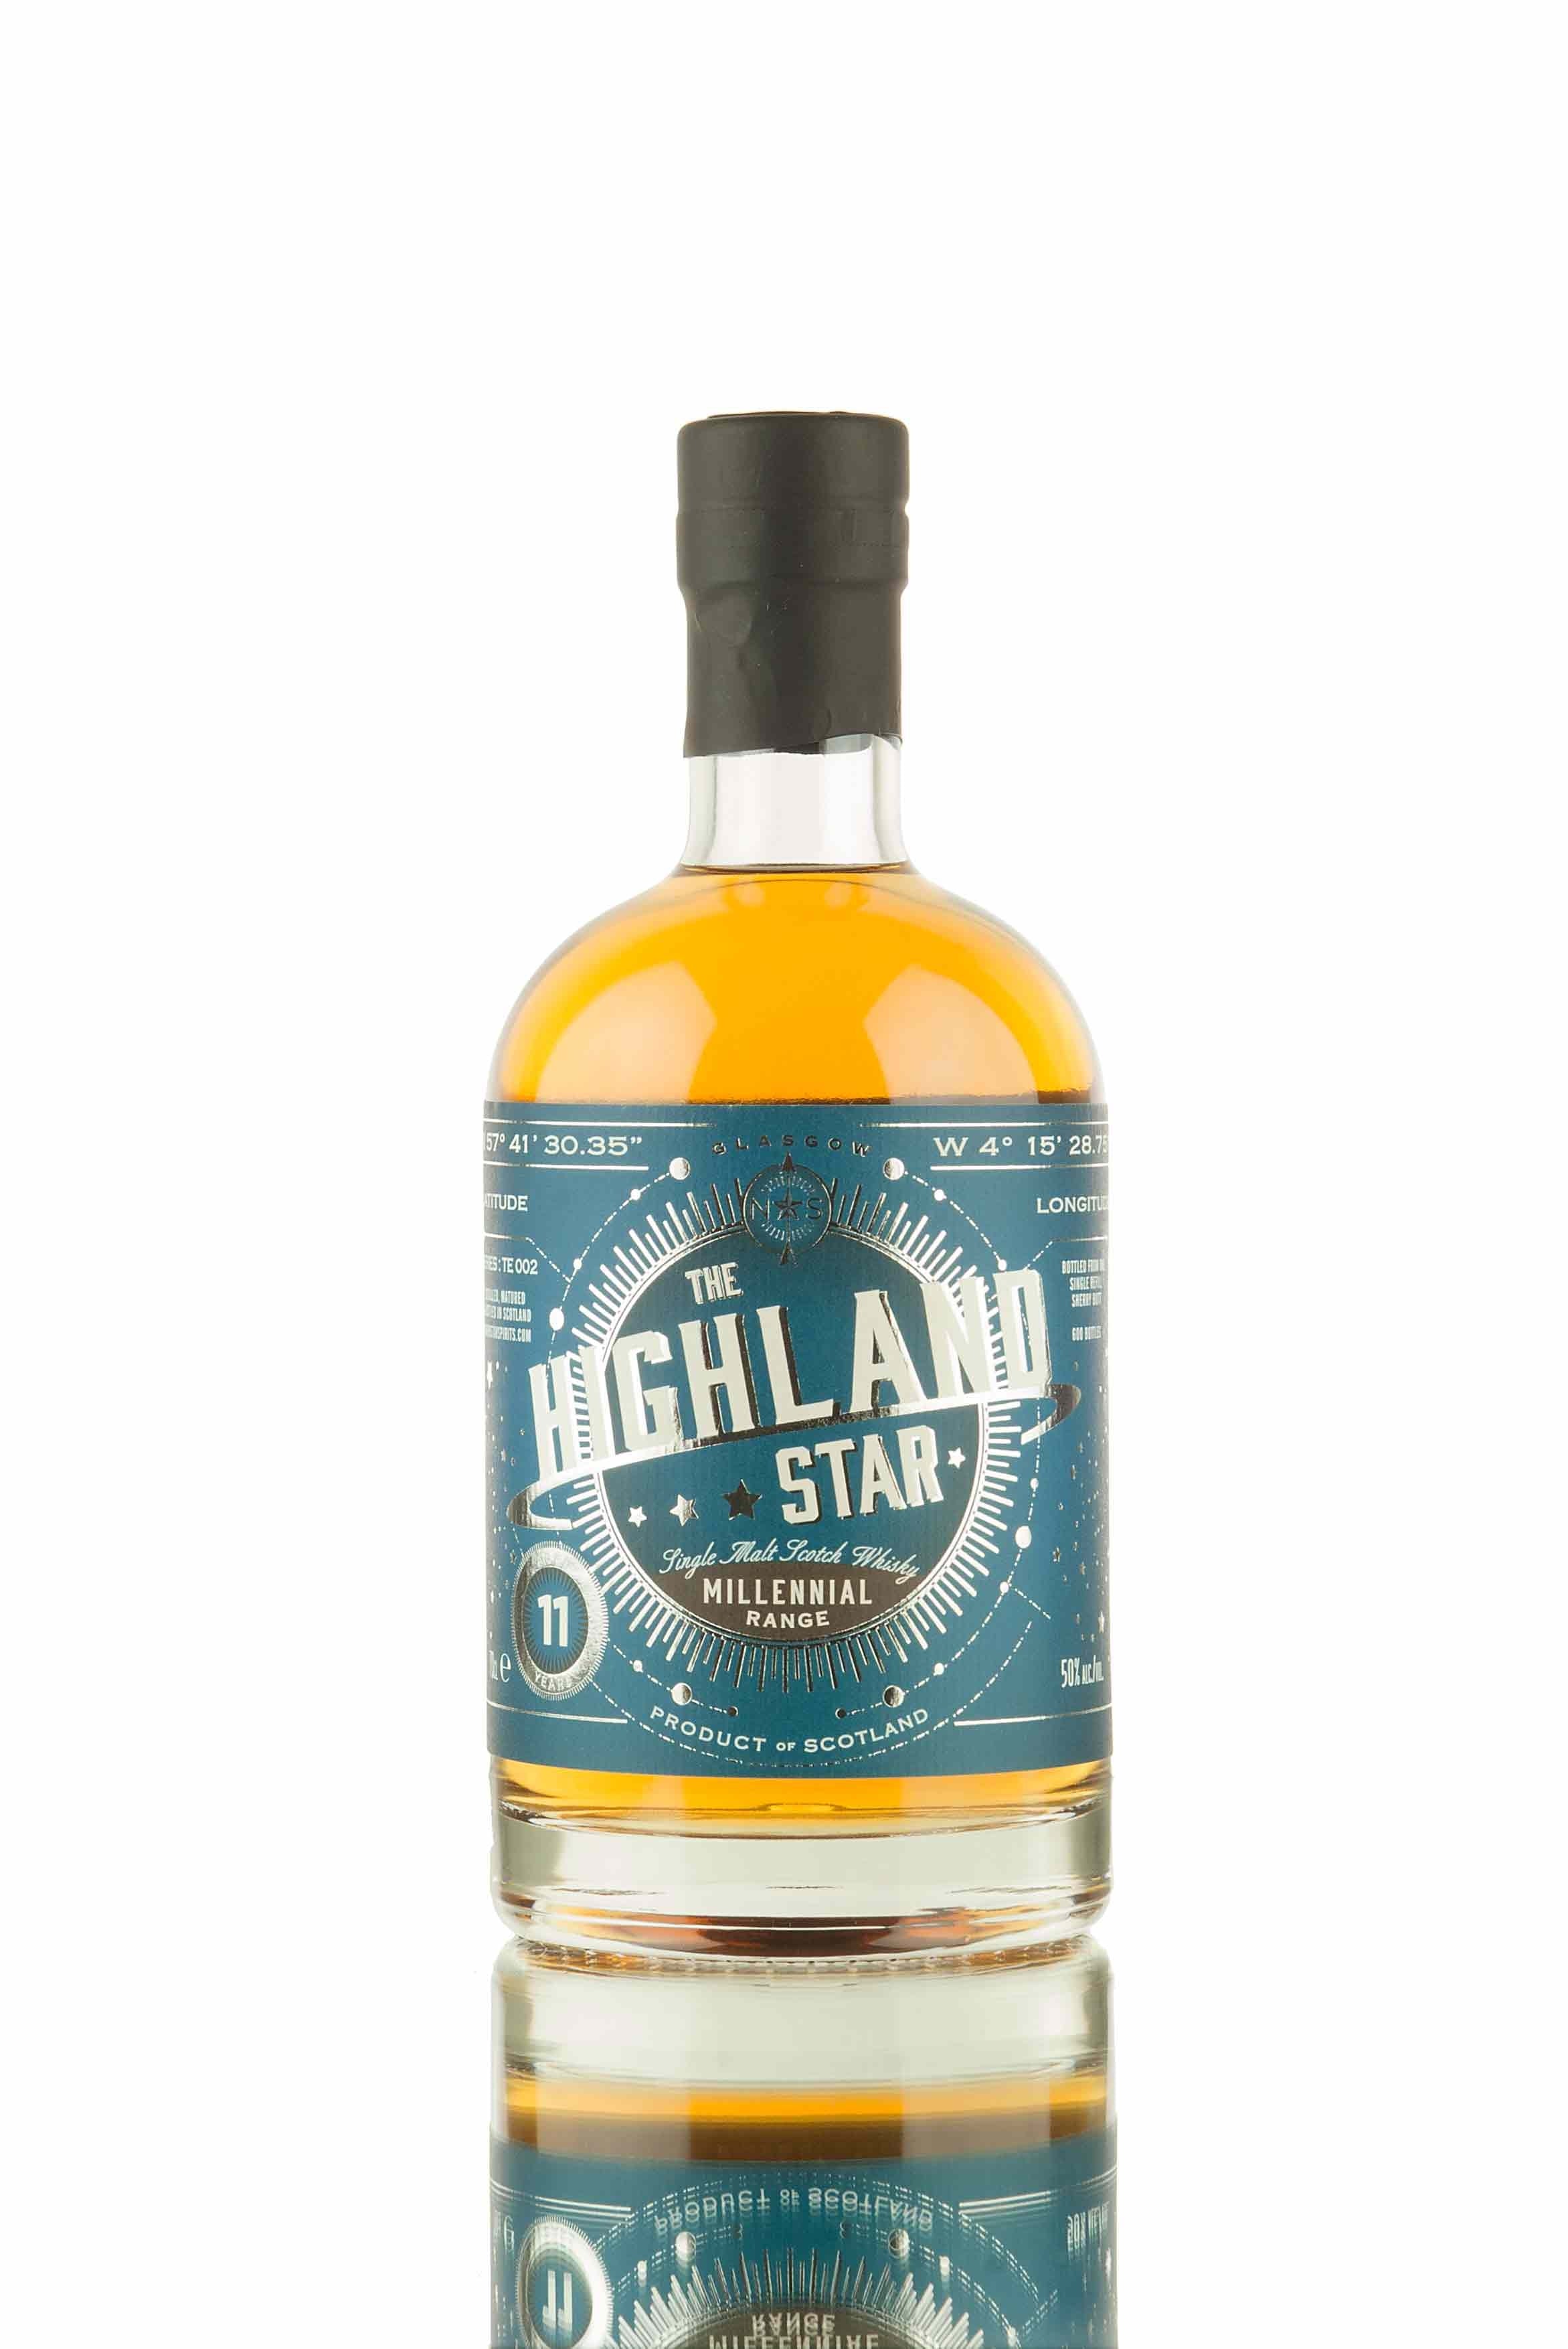 The Highland Star 11 Year Old | North Star Spirits (TE 002)